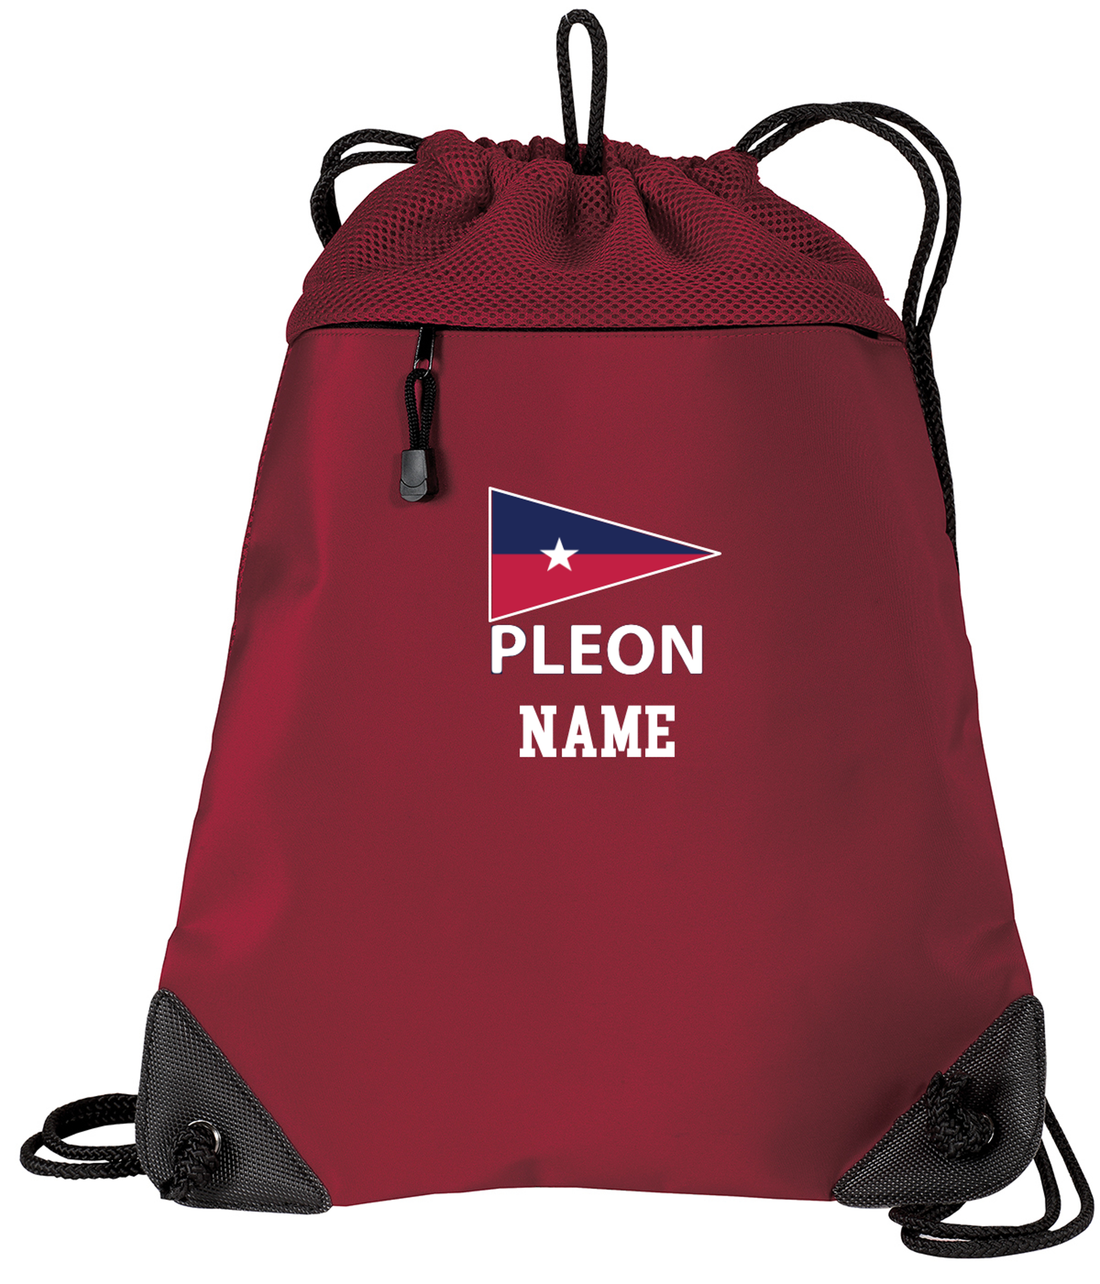 Pleon Personalized Cinch Bag